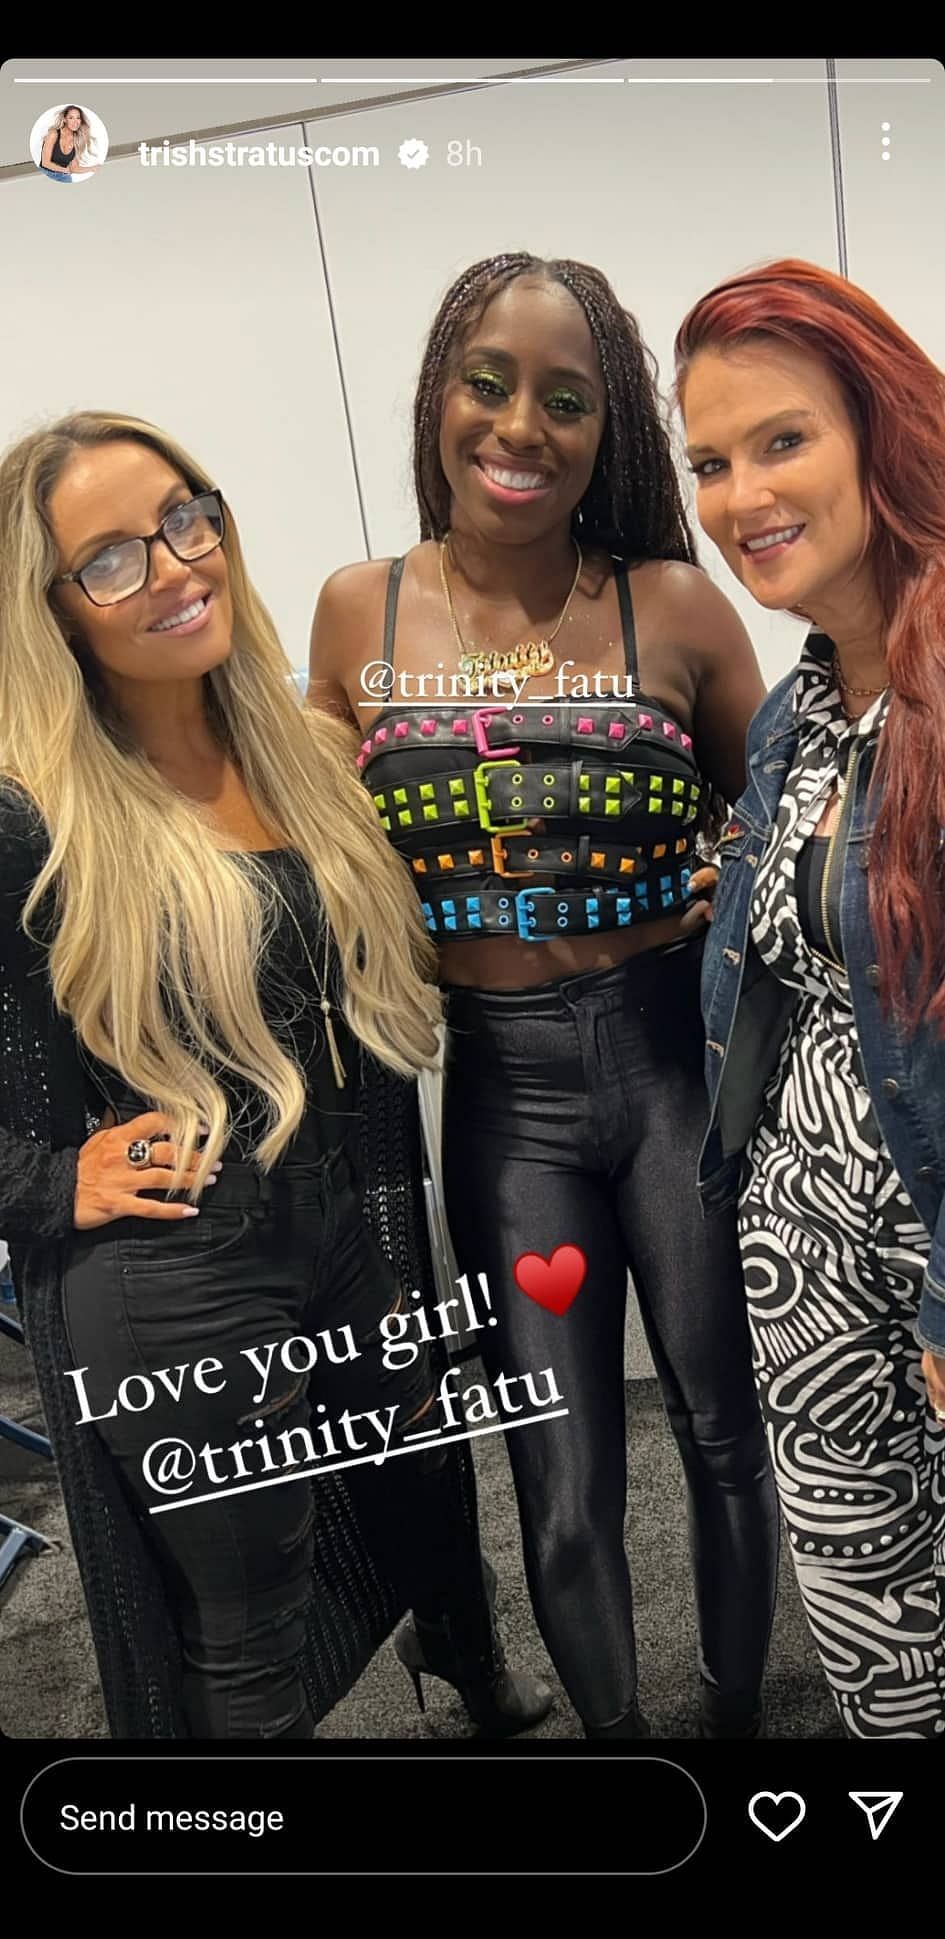 Naomi, alongside Trish Stratus and Lita